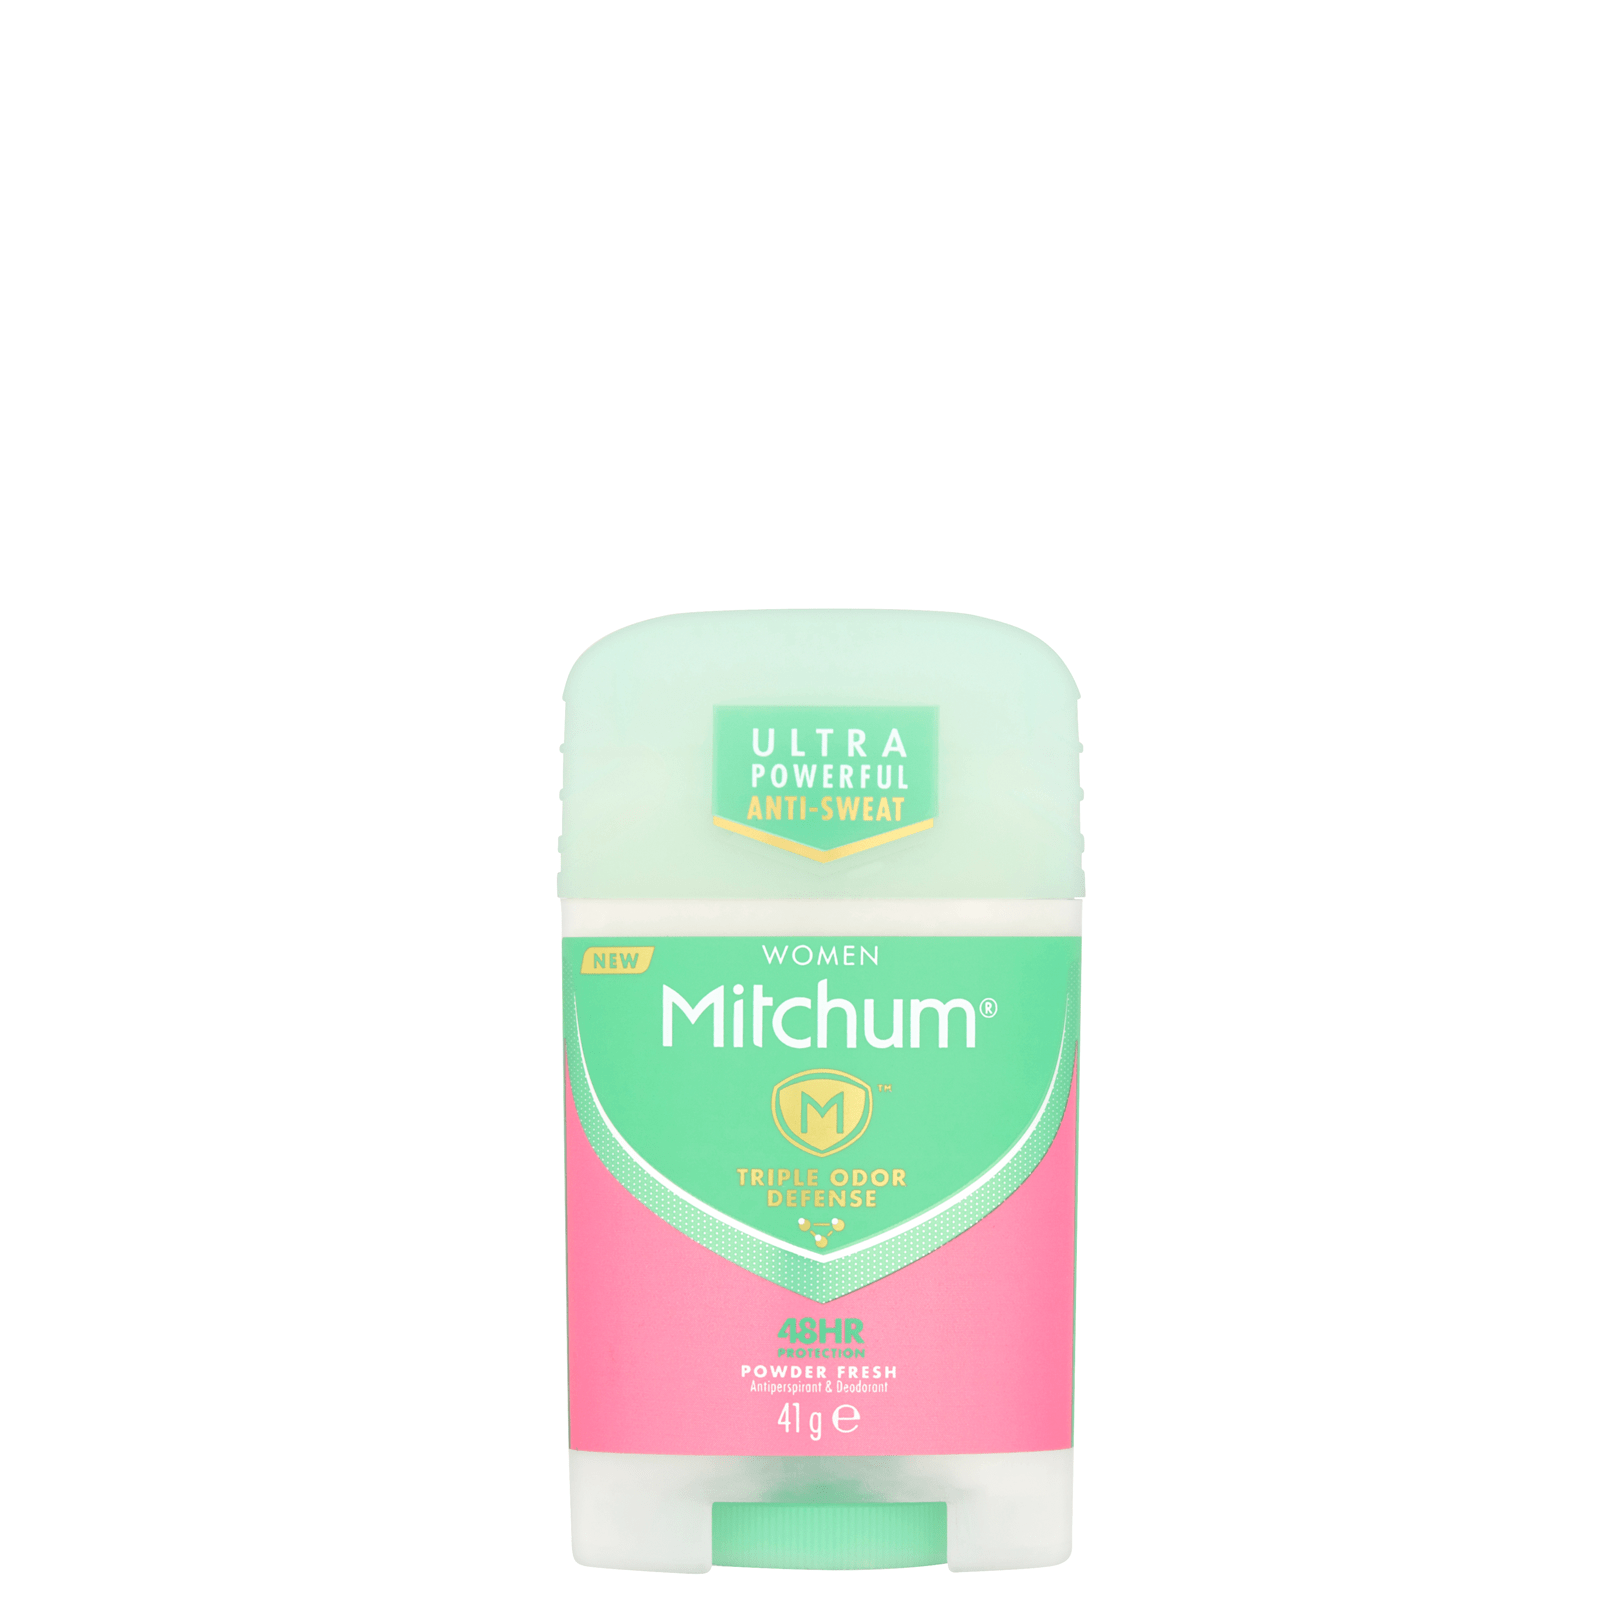 Mitchum Advanced Women's 48hr Protection Powder Fresh Deodorant Stick 41g